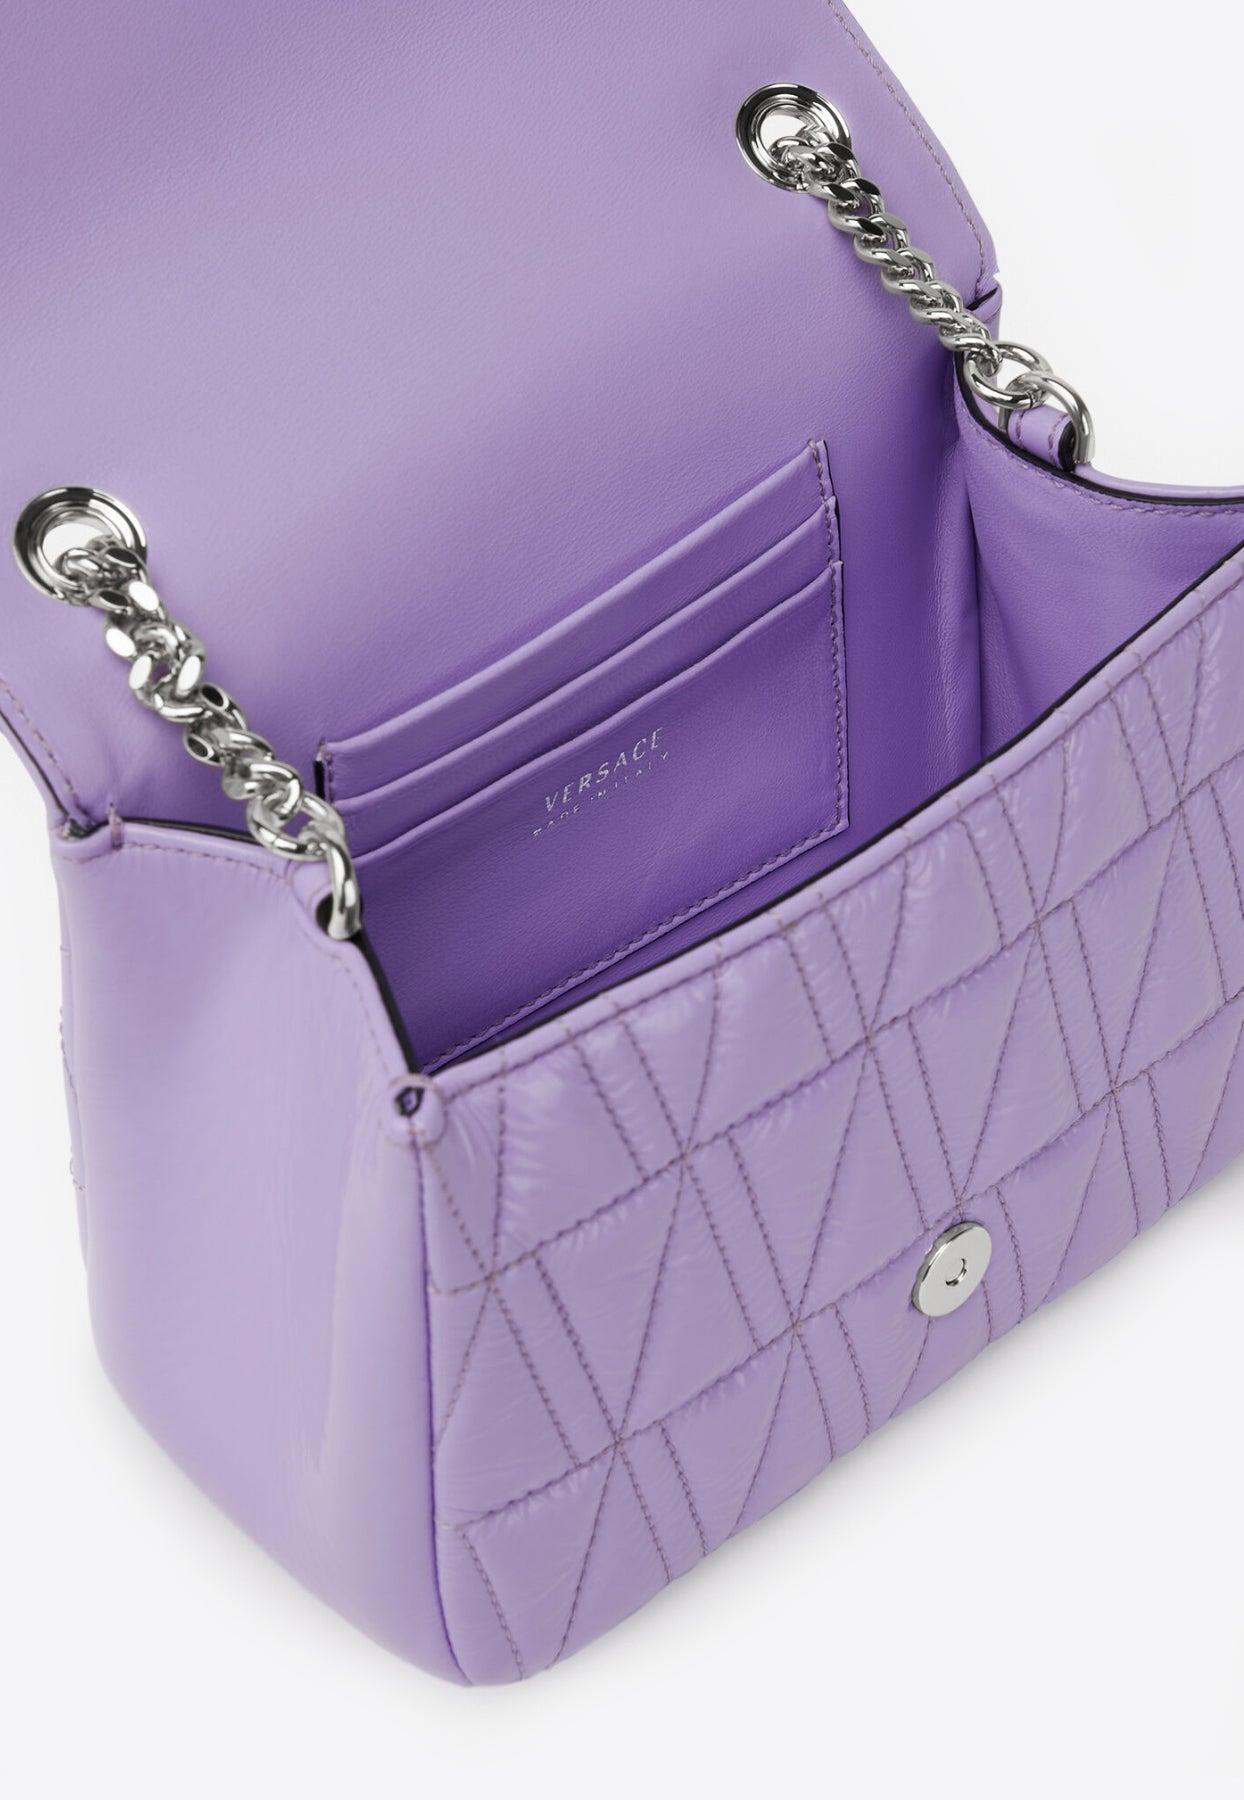 Versace Virtus Quilted Naplak Leather Shoulder Bag in Purple | Lyst